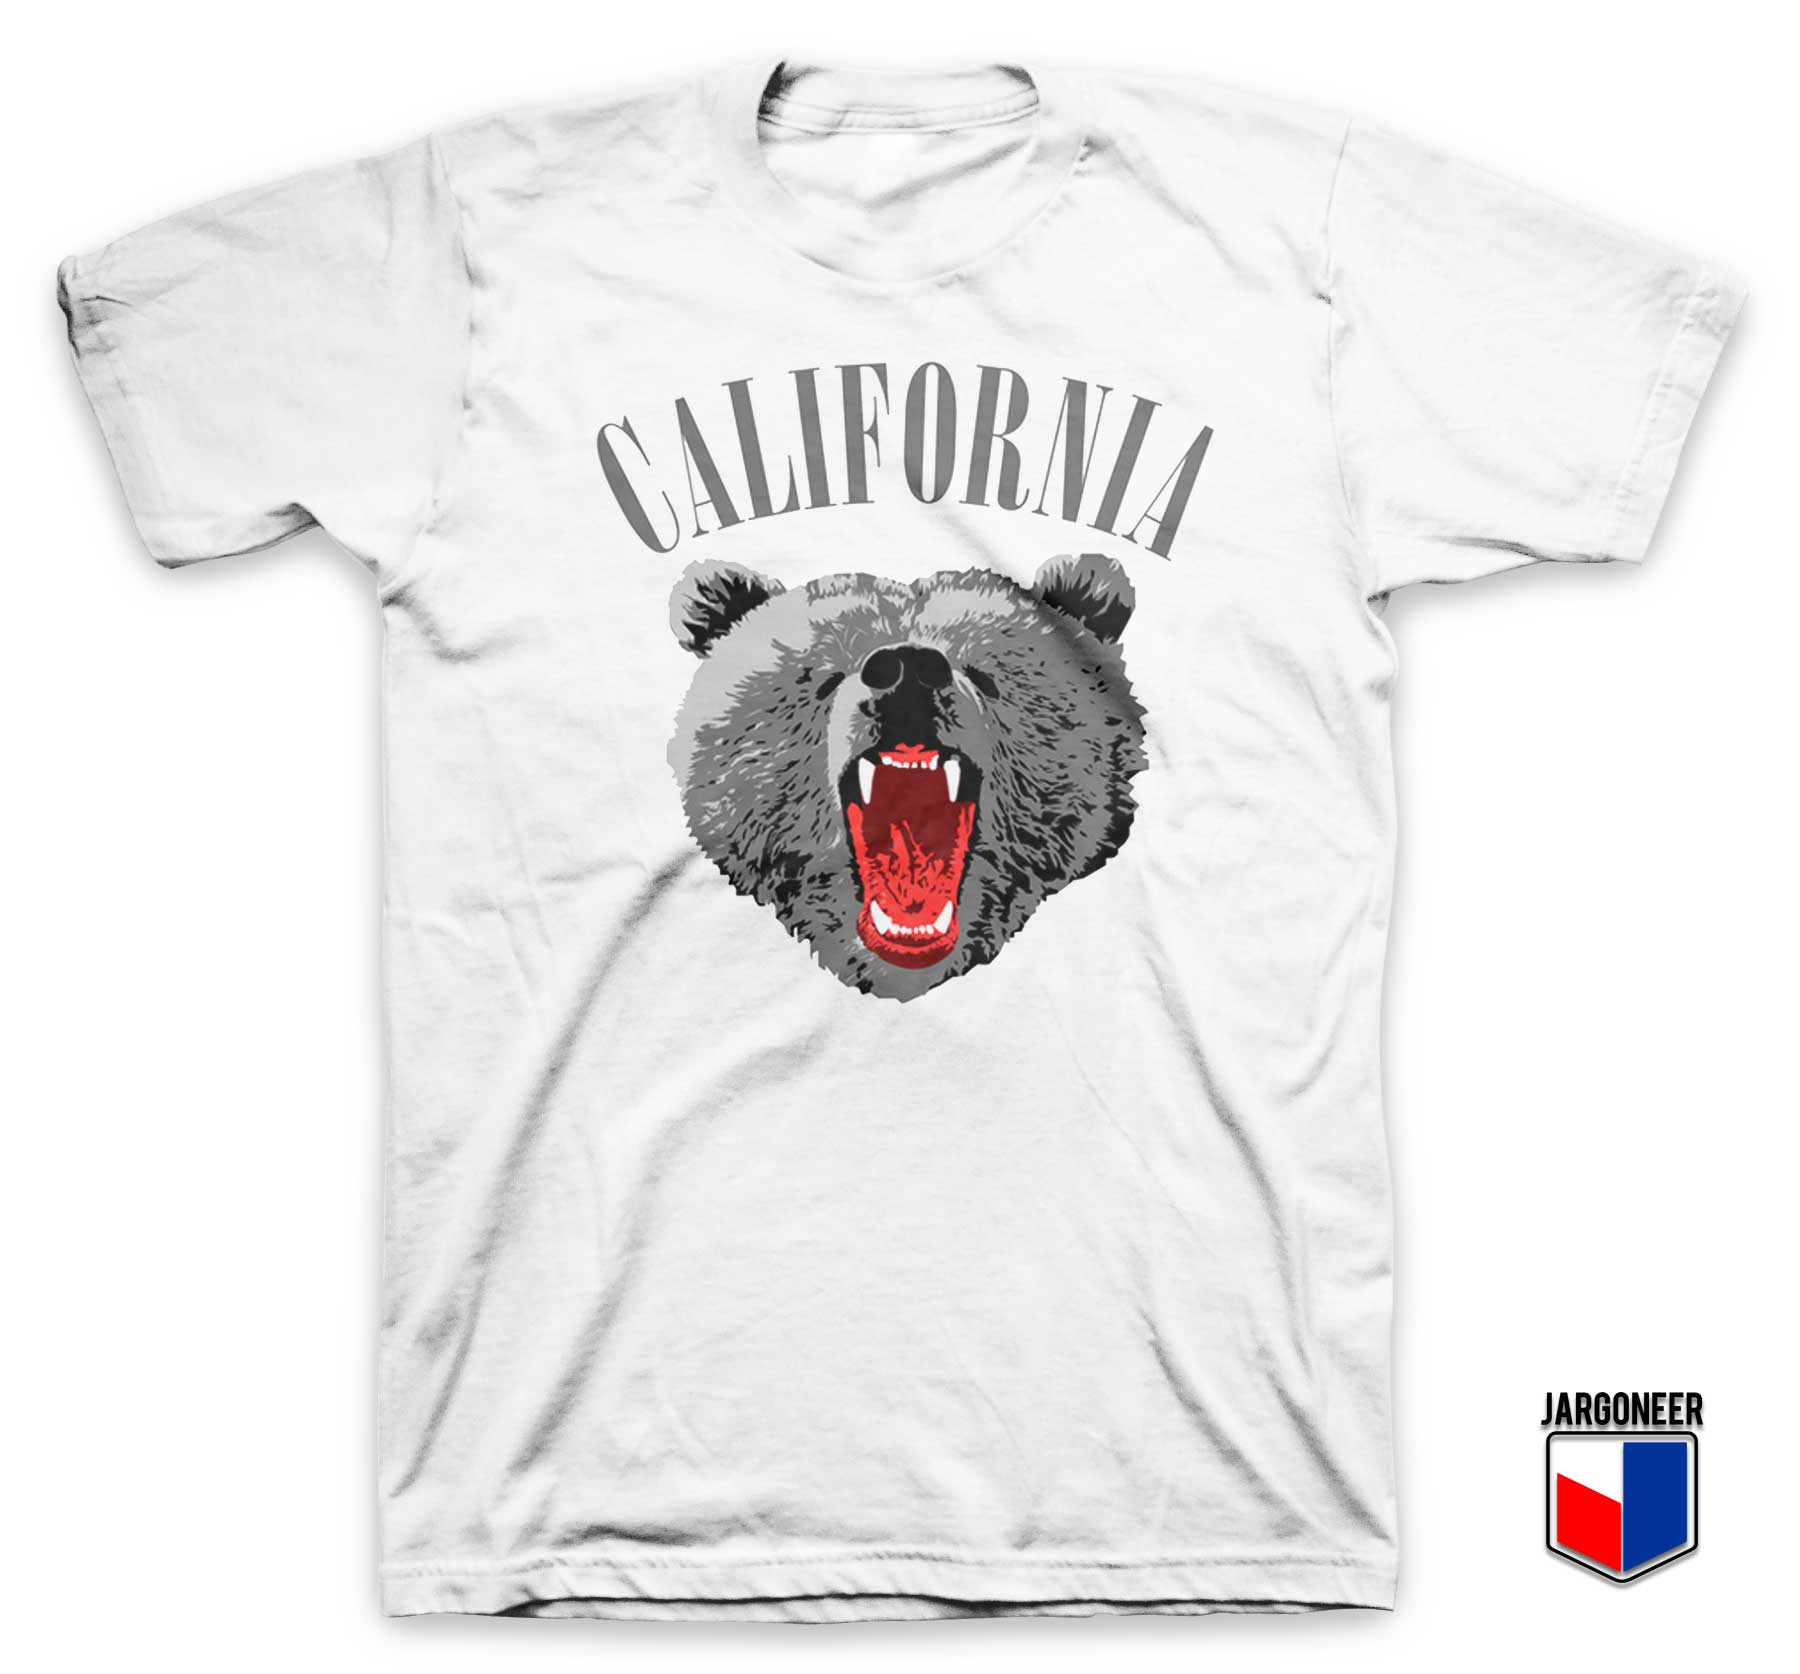 California Bear T Shirt - Shop Unique Graphic Cool Shirt Designs